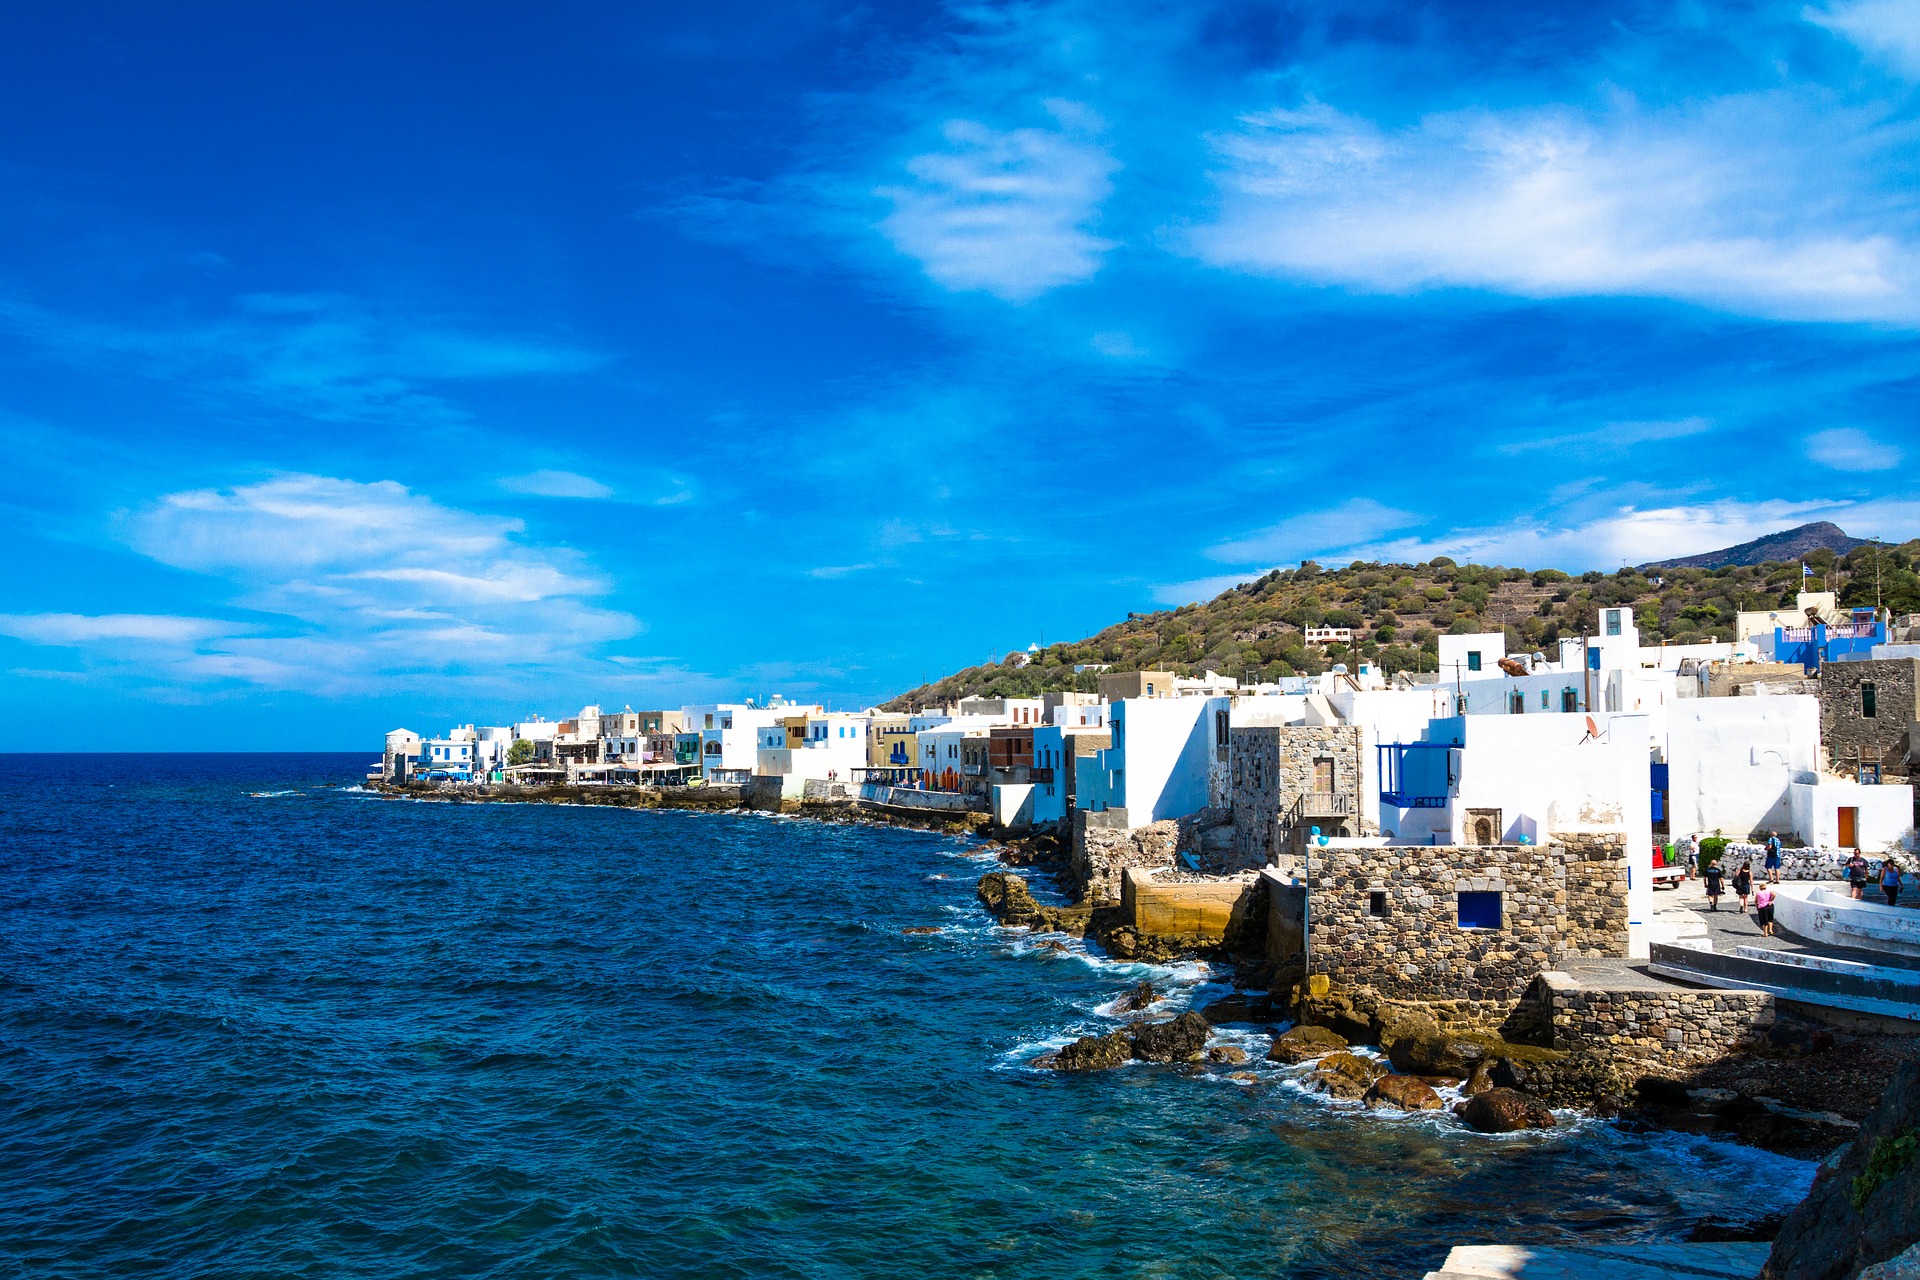 Low budget διακοπές | 4 πανέμορφα ελληνικά νησιά που θα σου κοστίσουν ελάχιστα